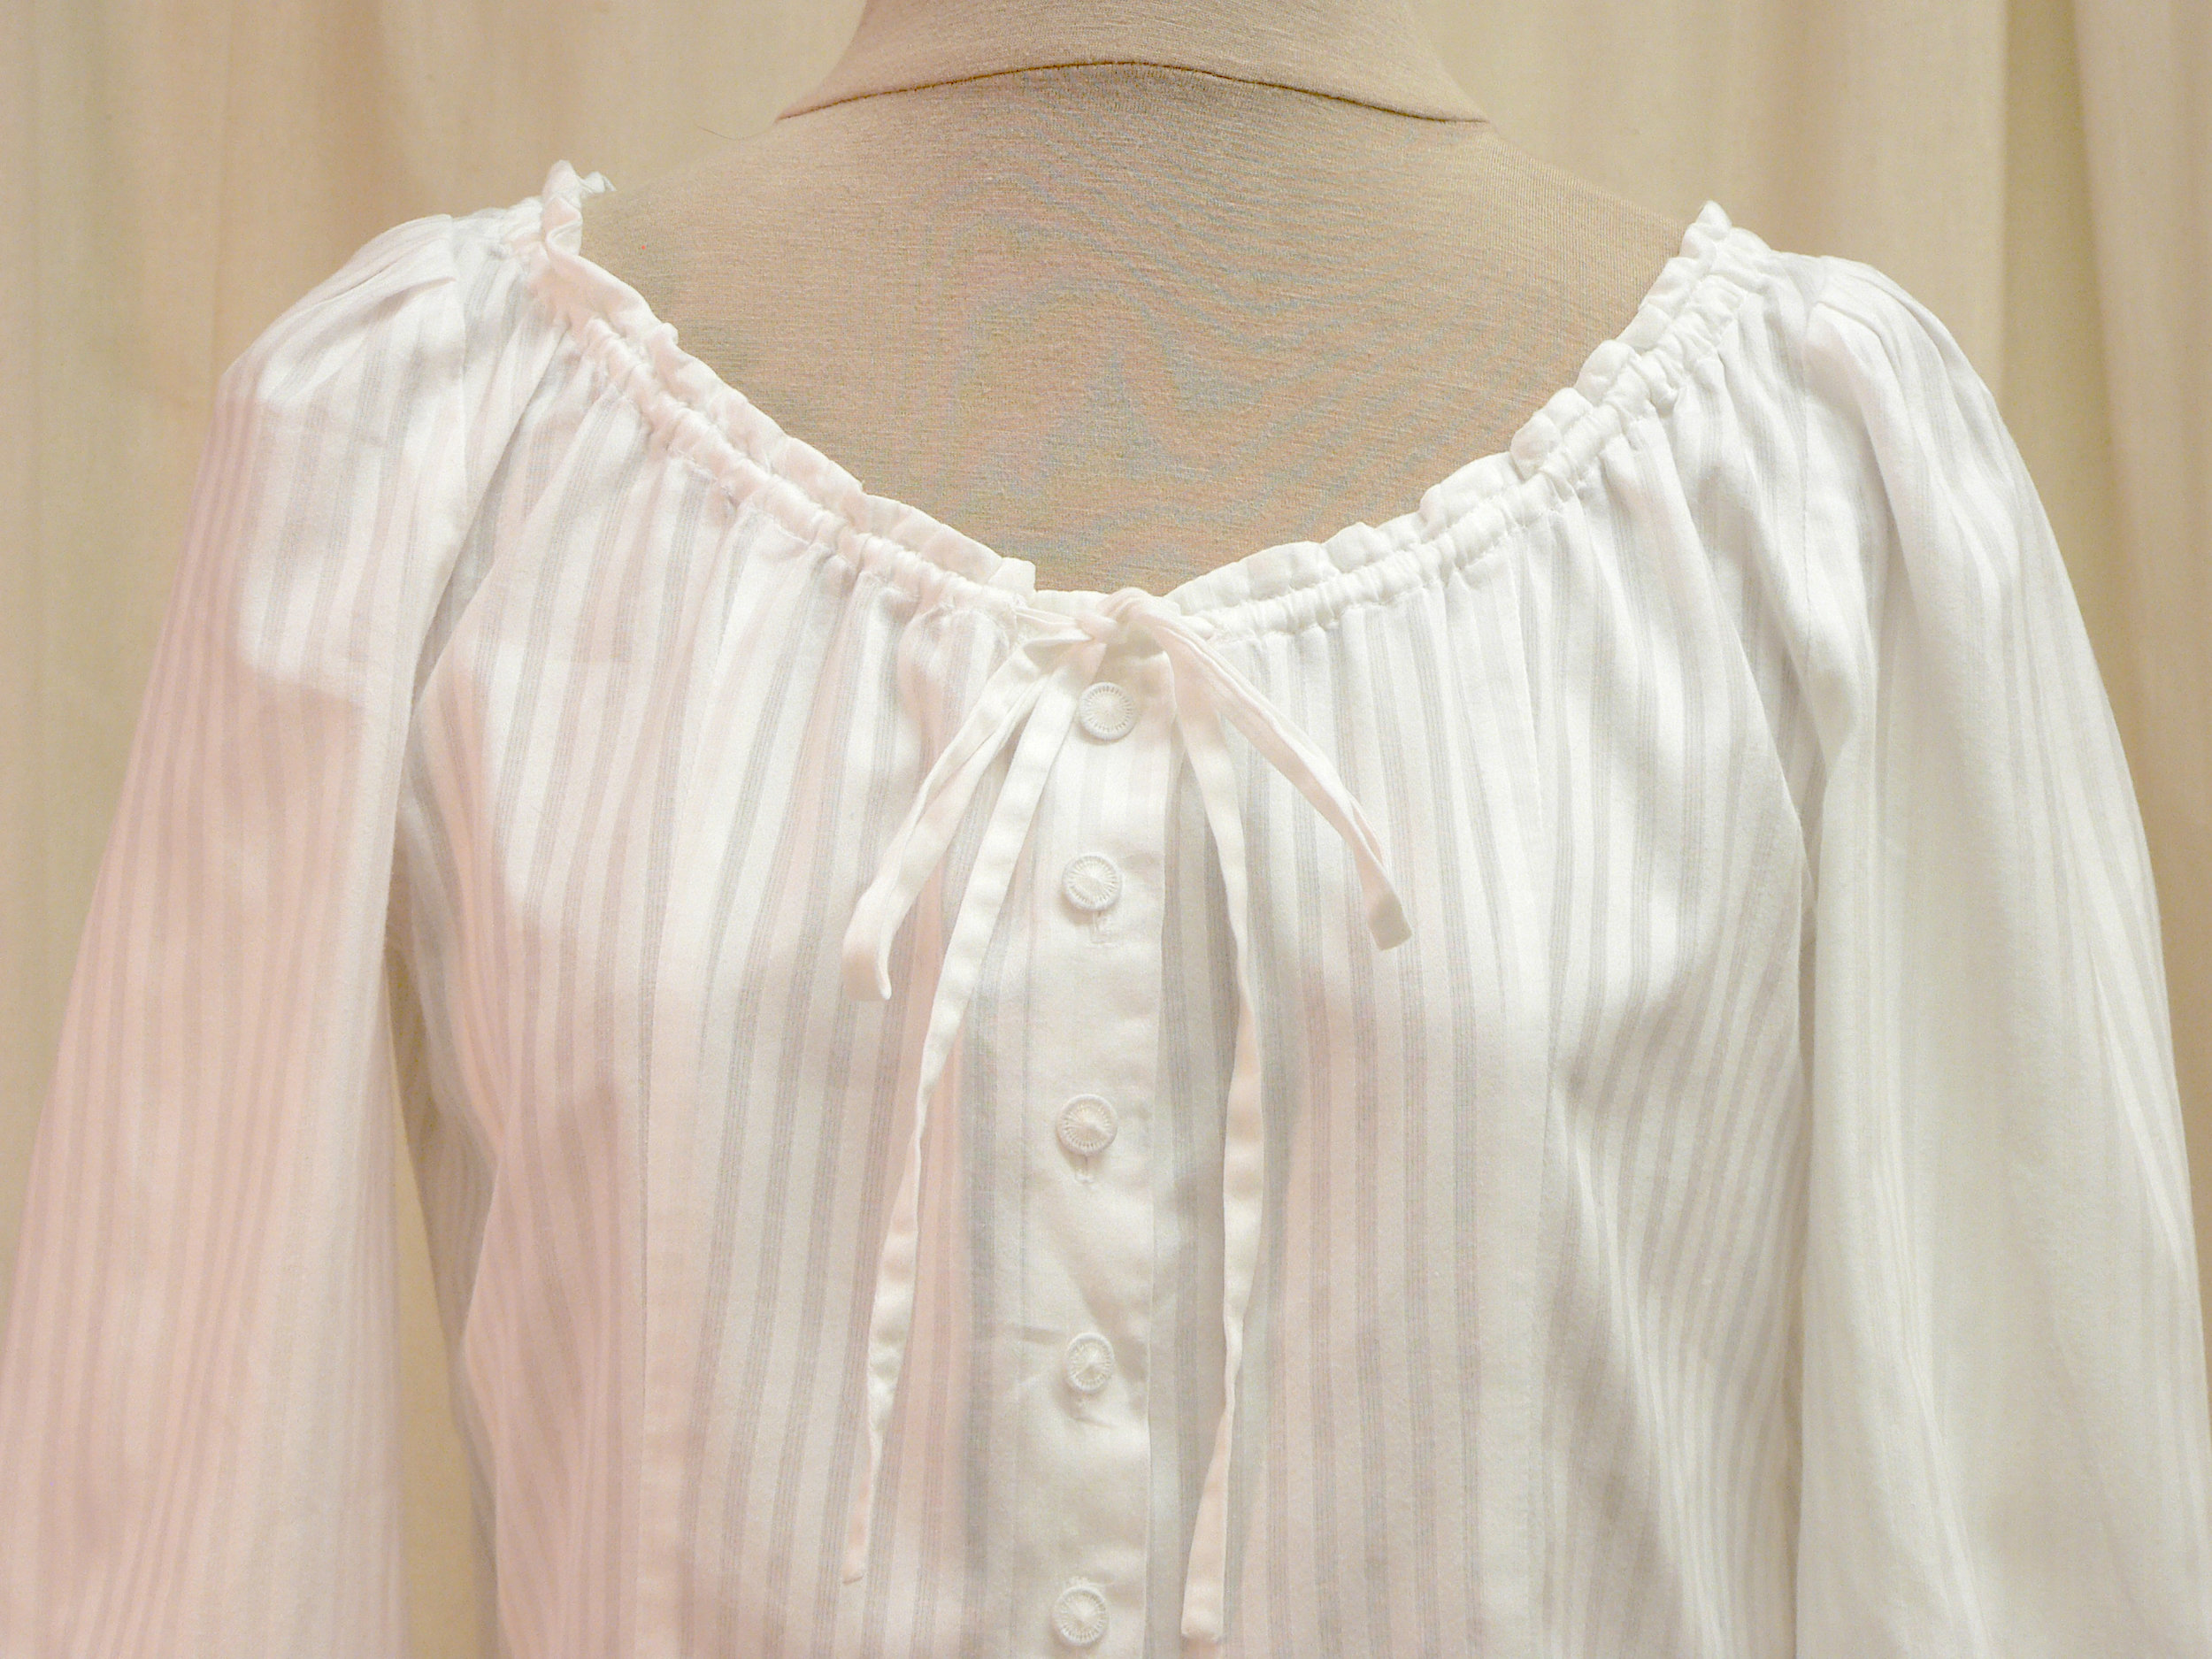 blouse07_front_detail.jpg